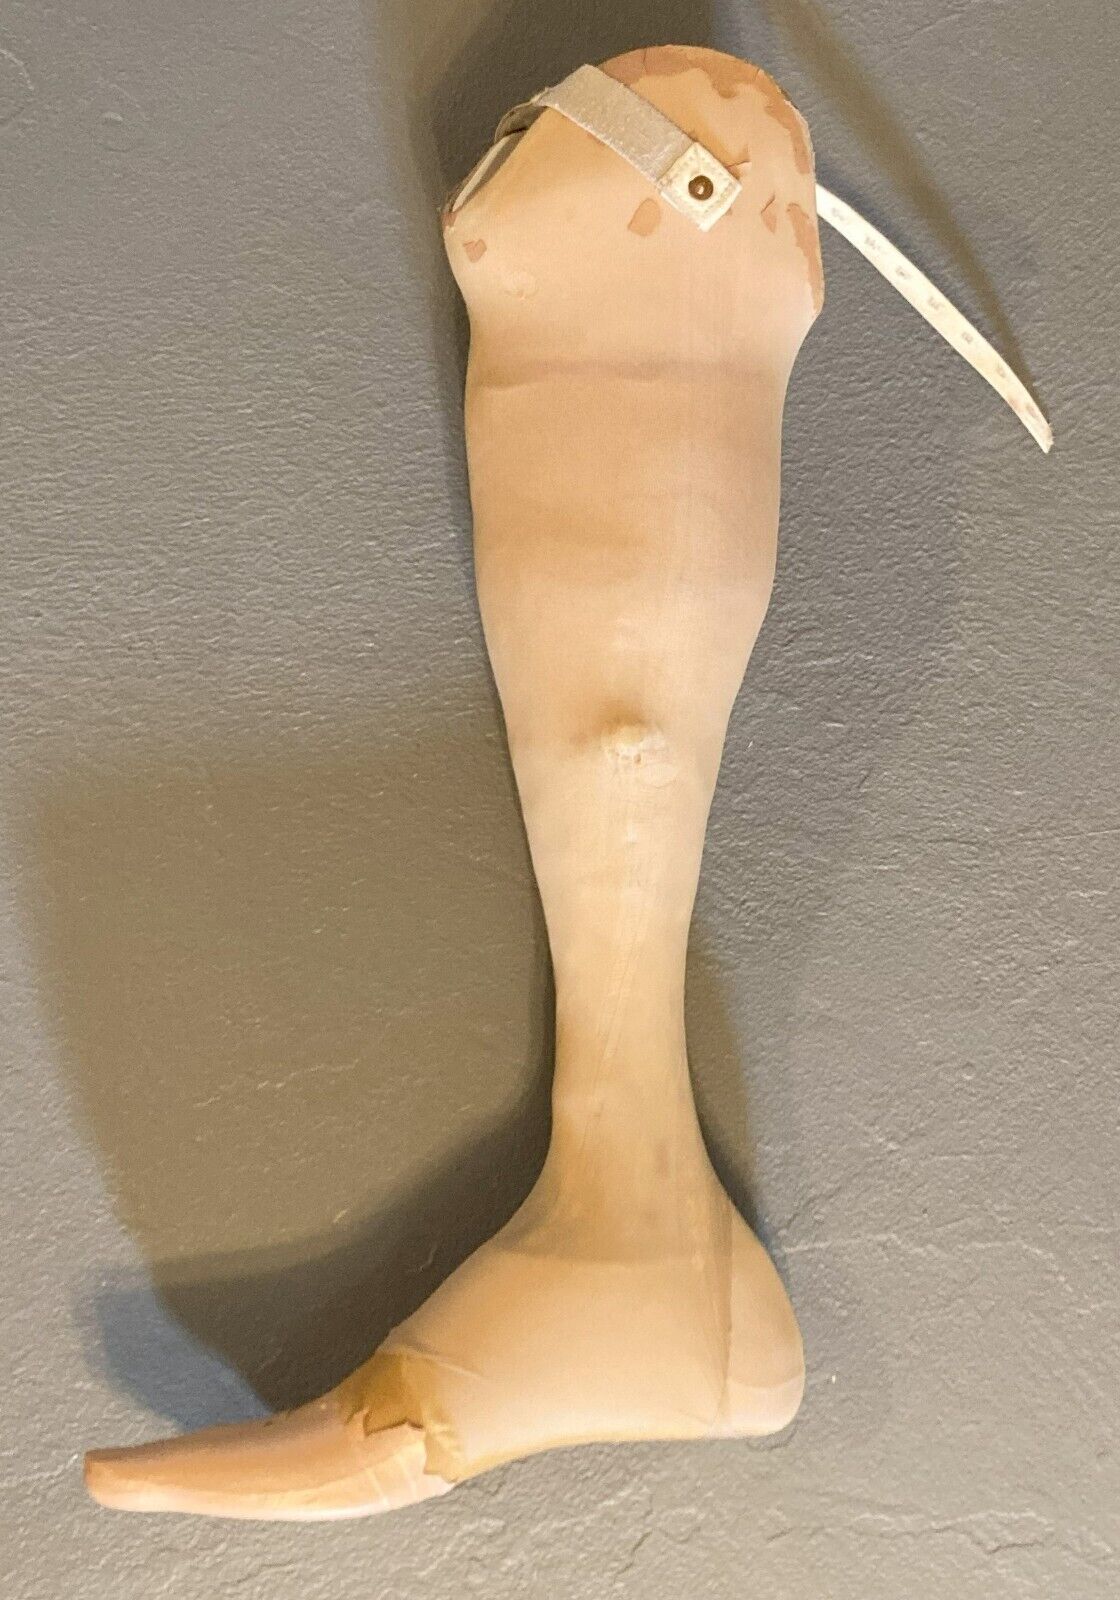 Complete Prosthetic Right Leg